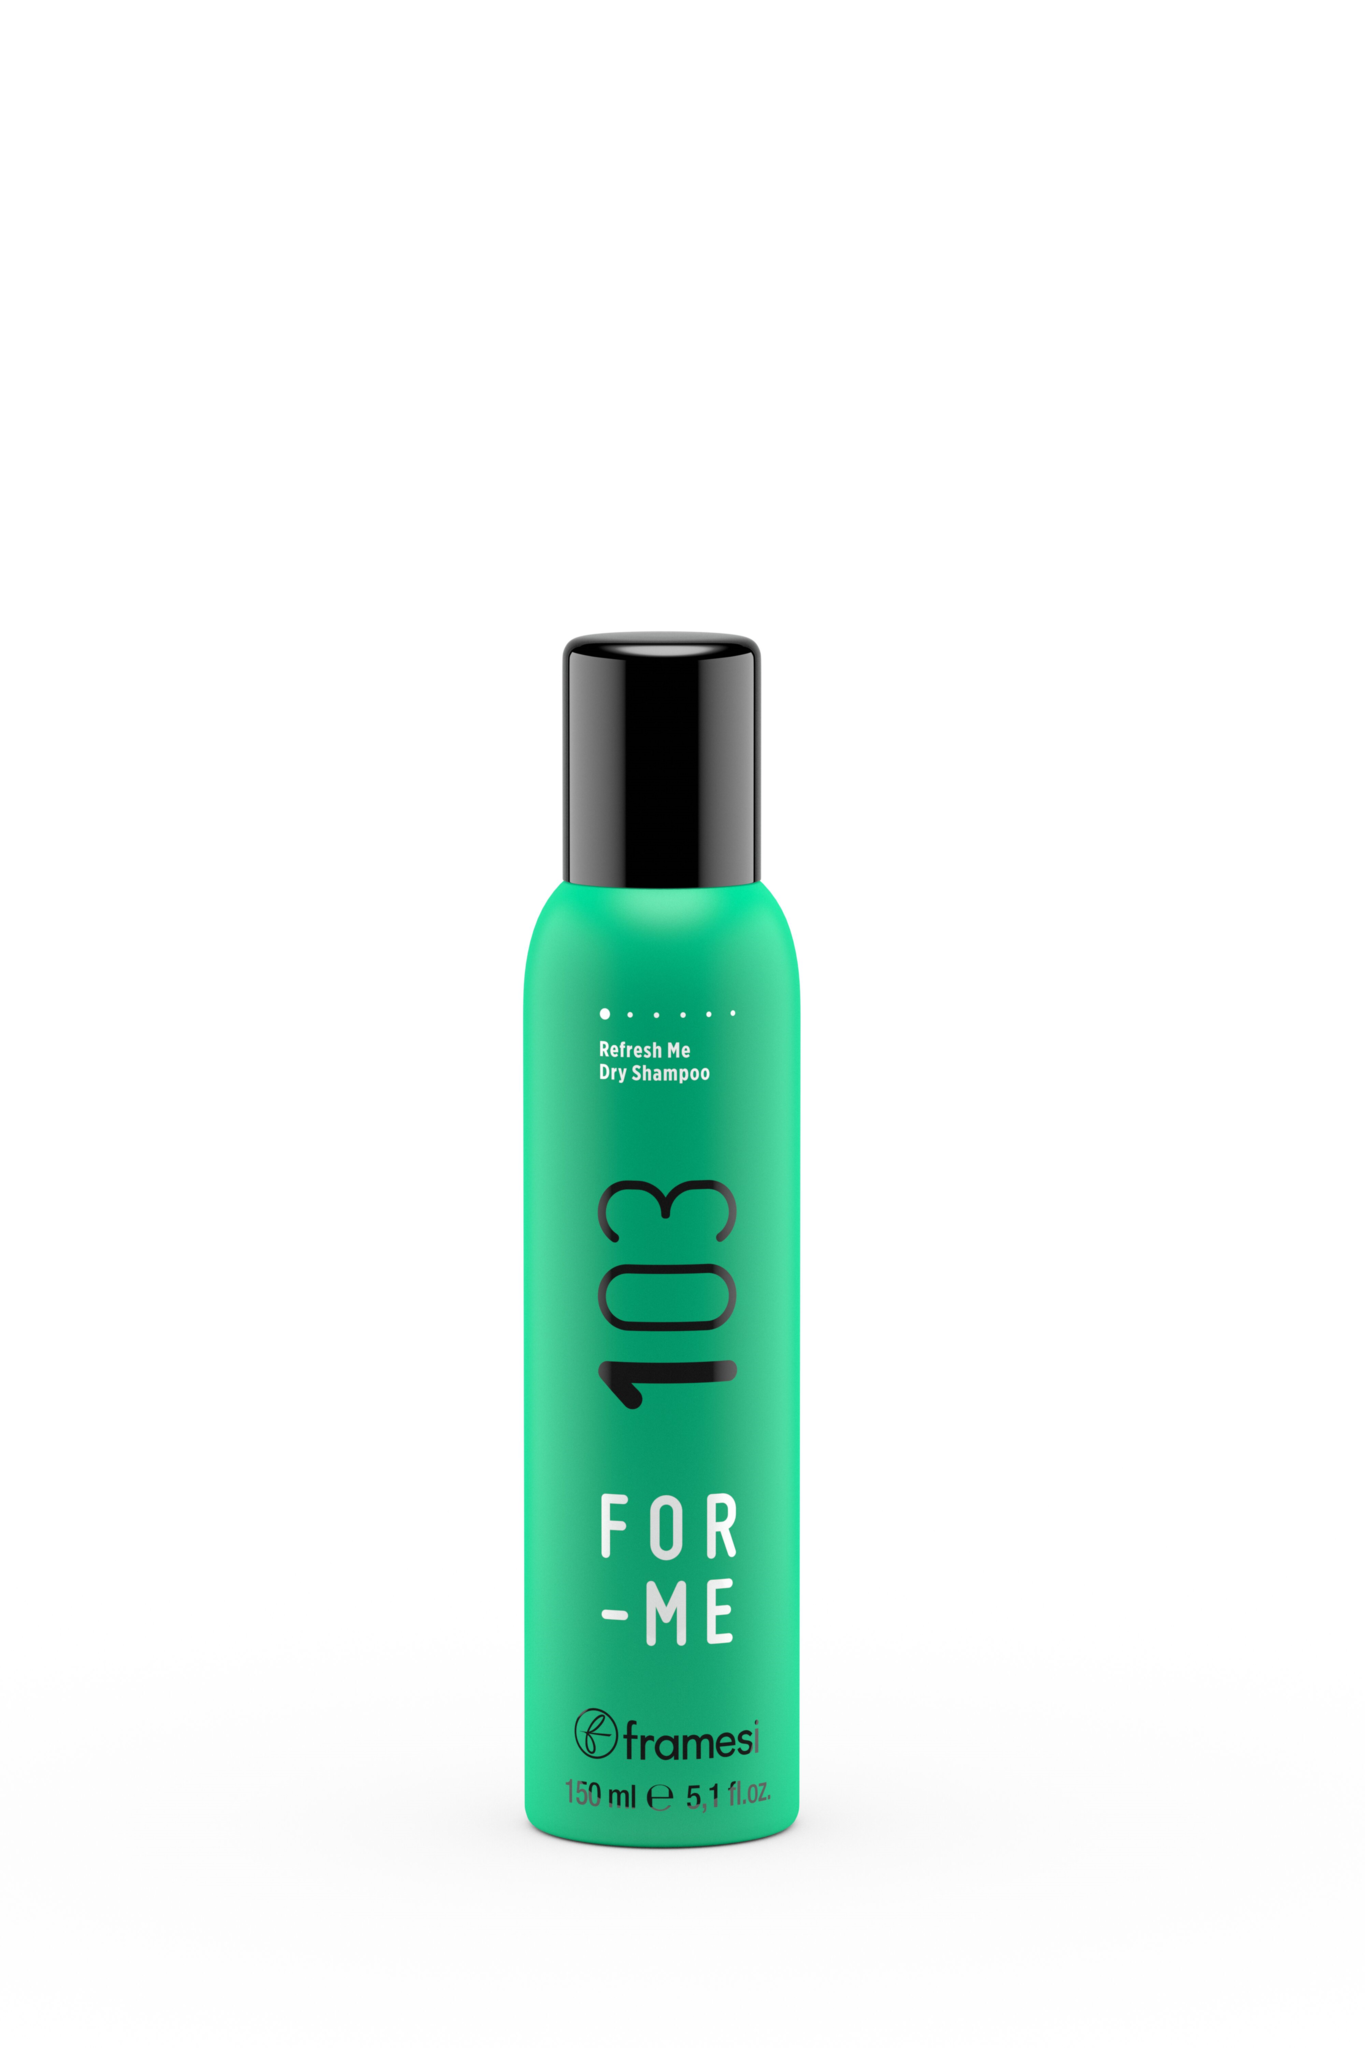 framesi-for-me-refresh-me-dry-shampoo-150ml-1-1